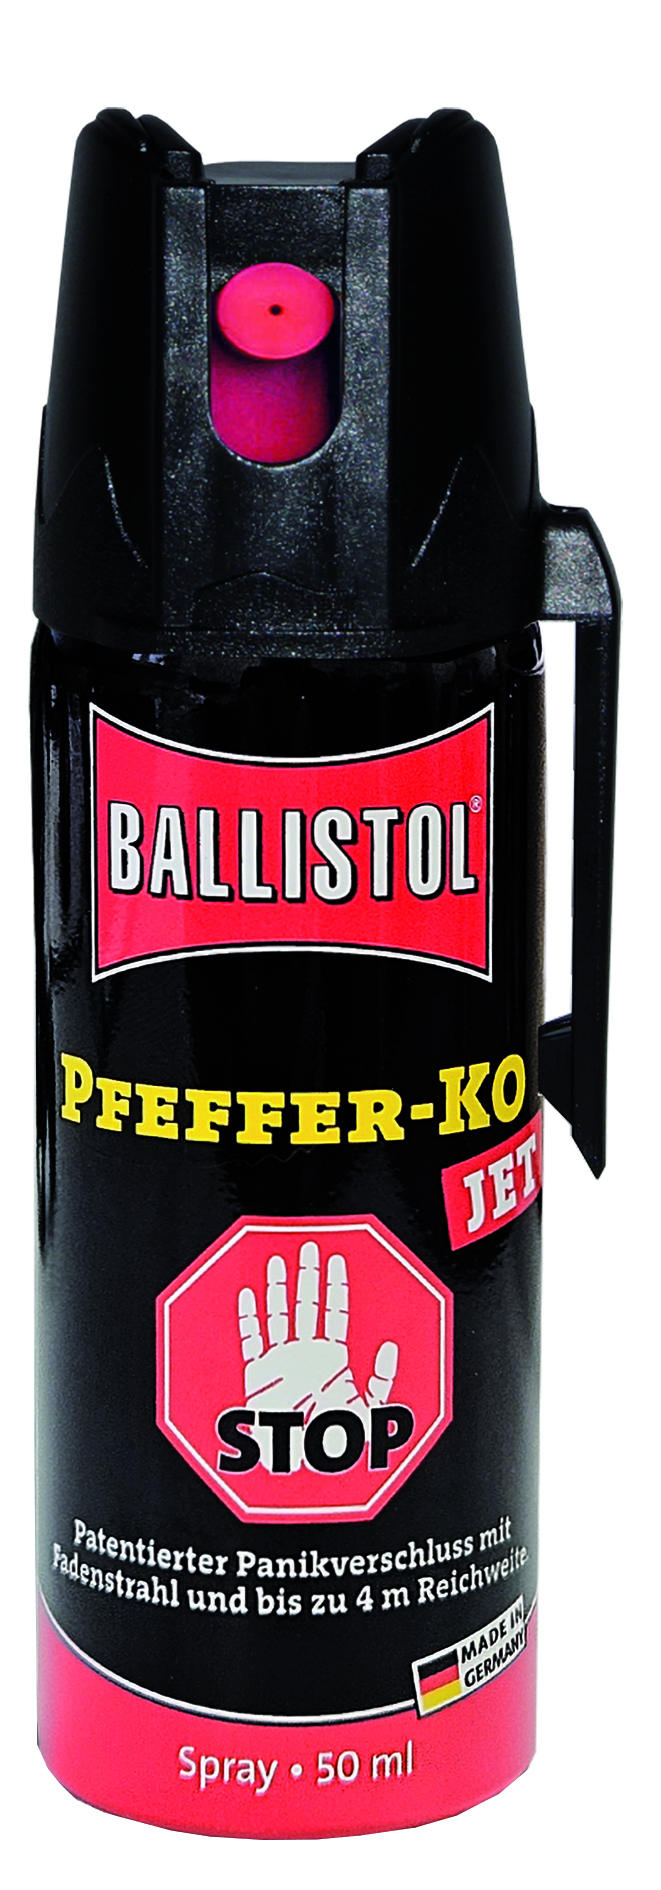 Ballistol Pfefferspray Jet 50 ml